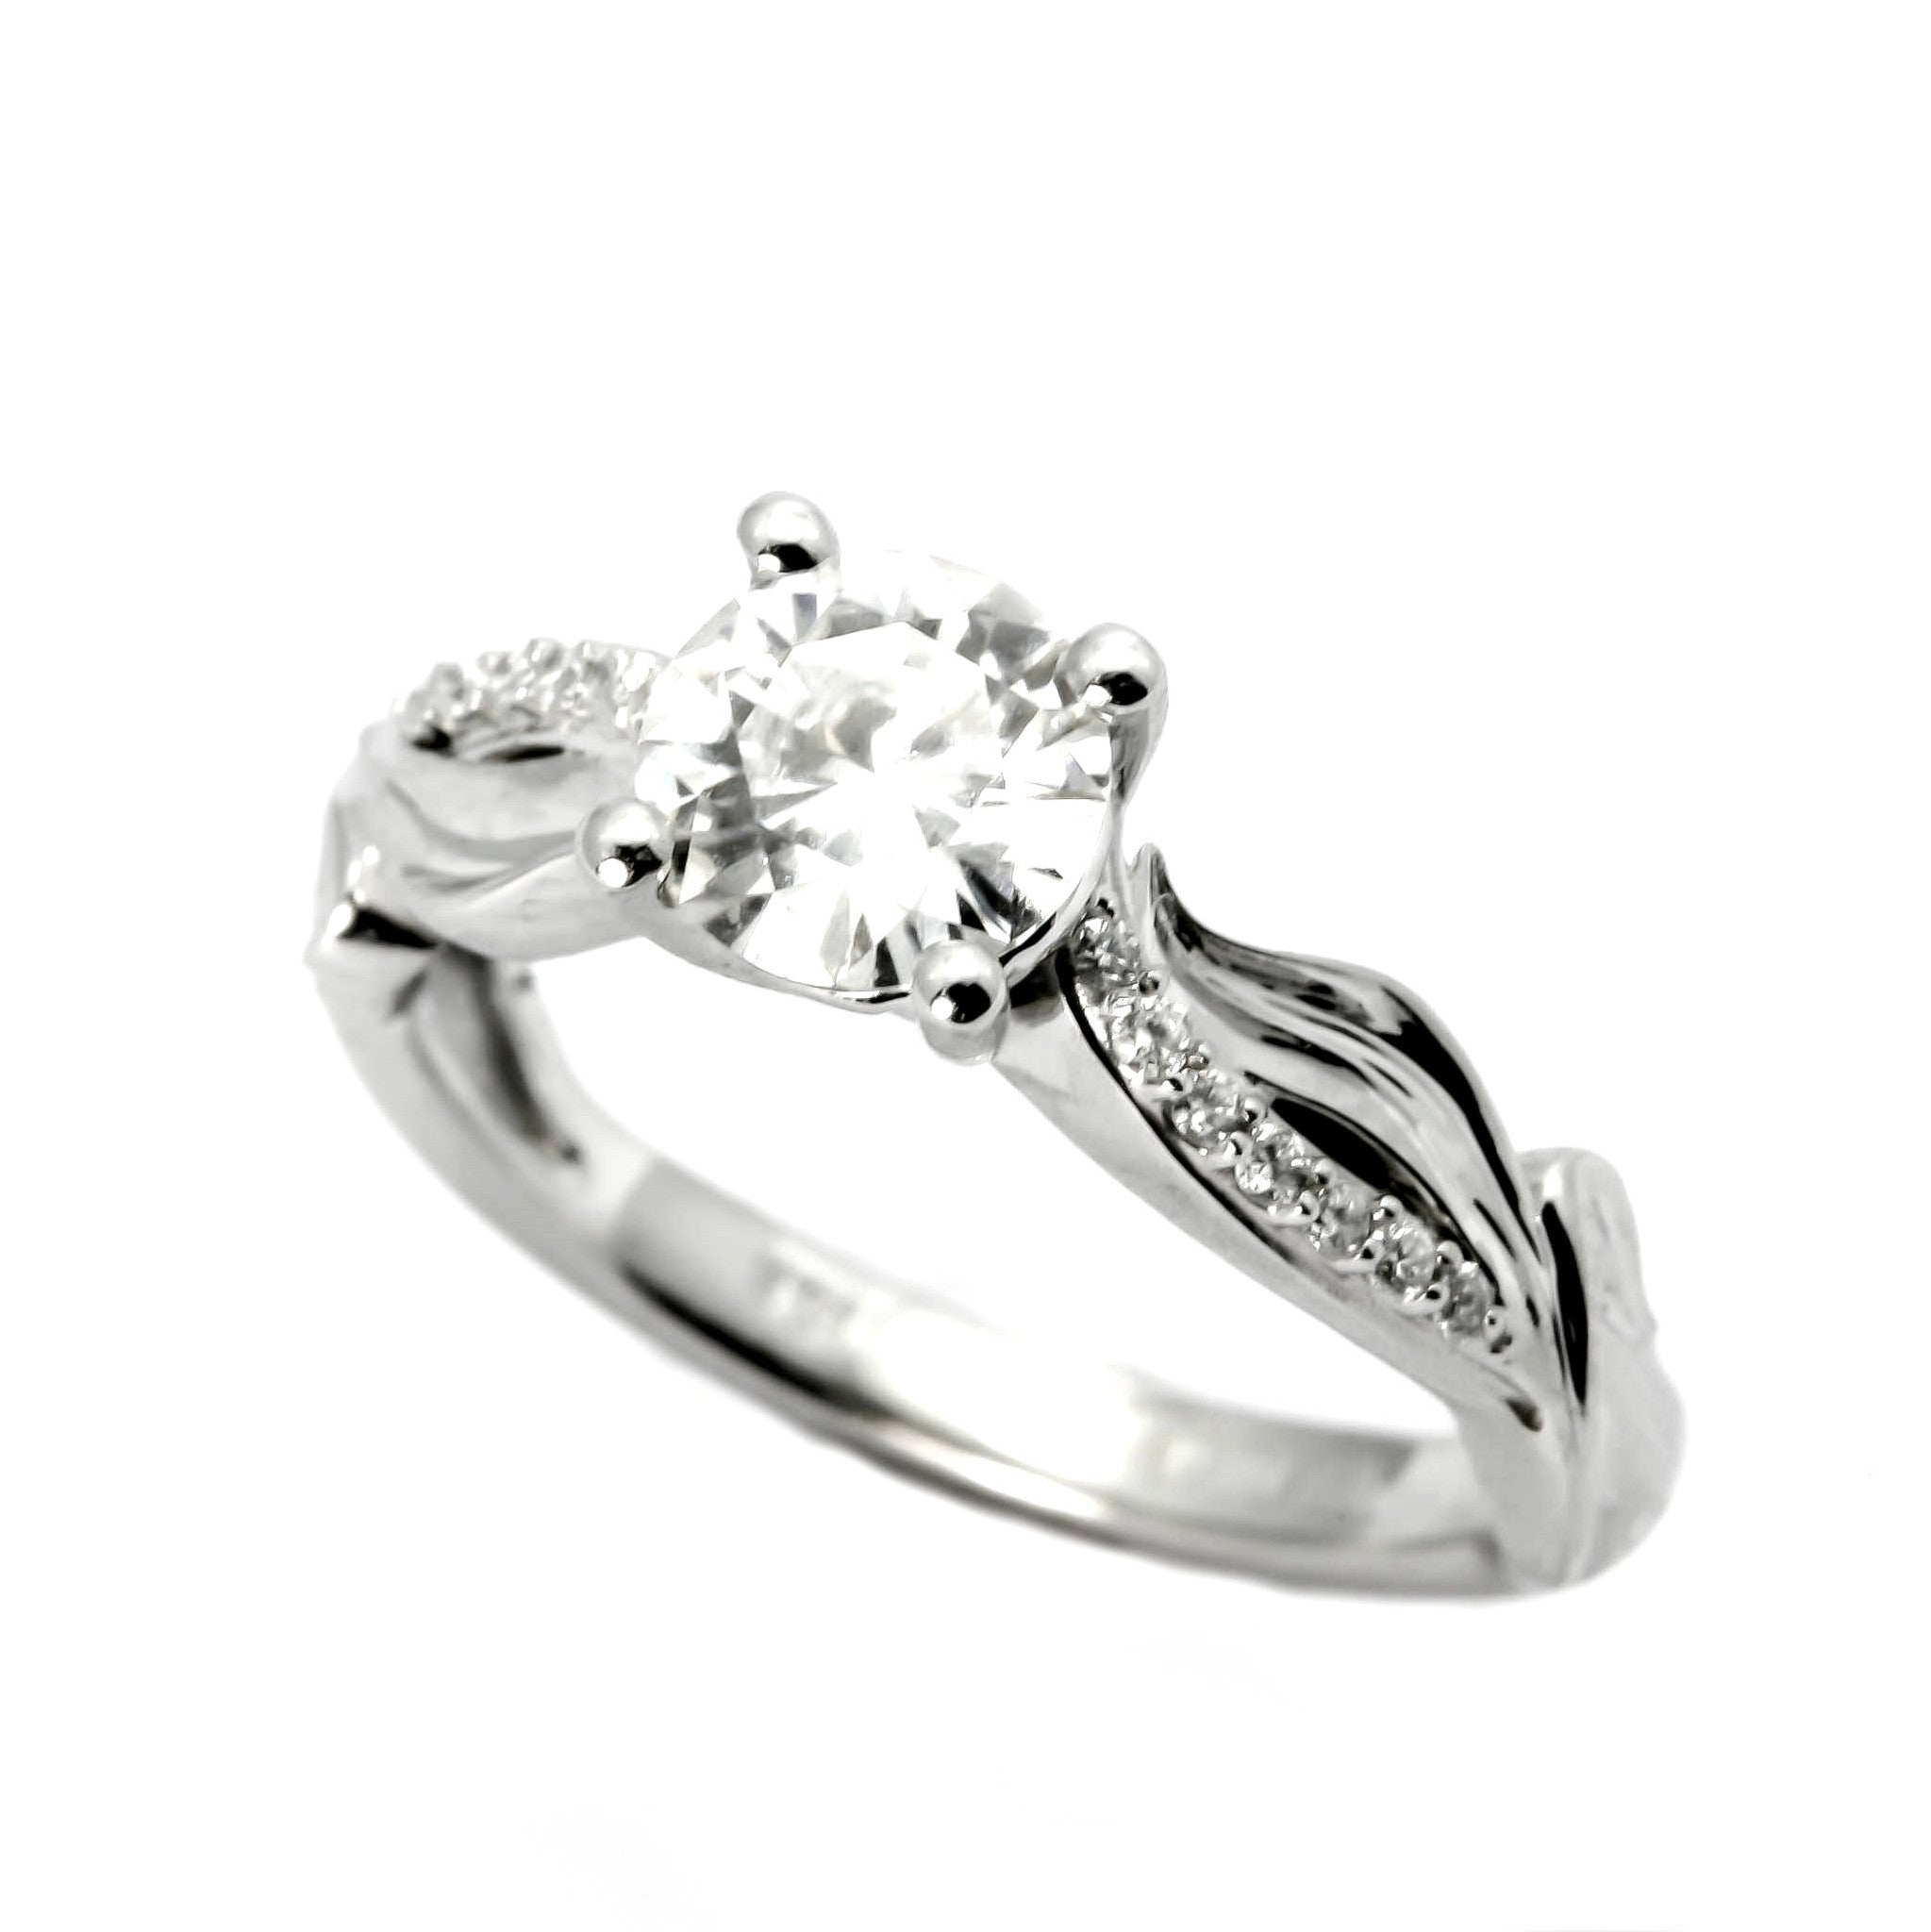 1 carat center stone diamond engagement rings